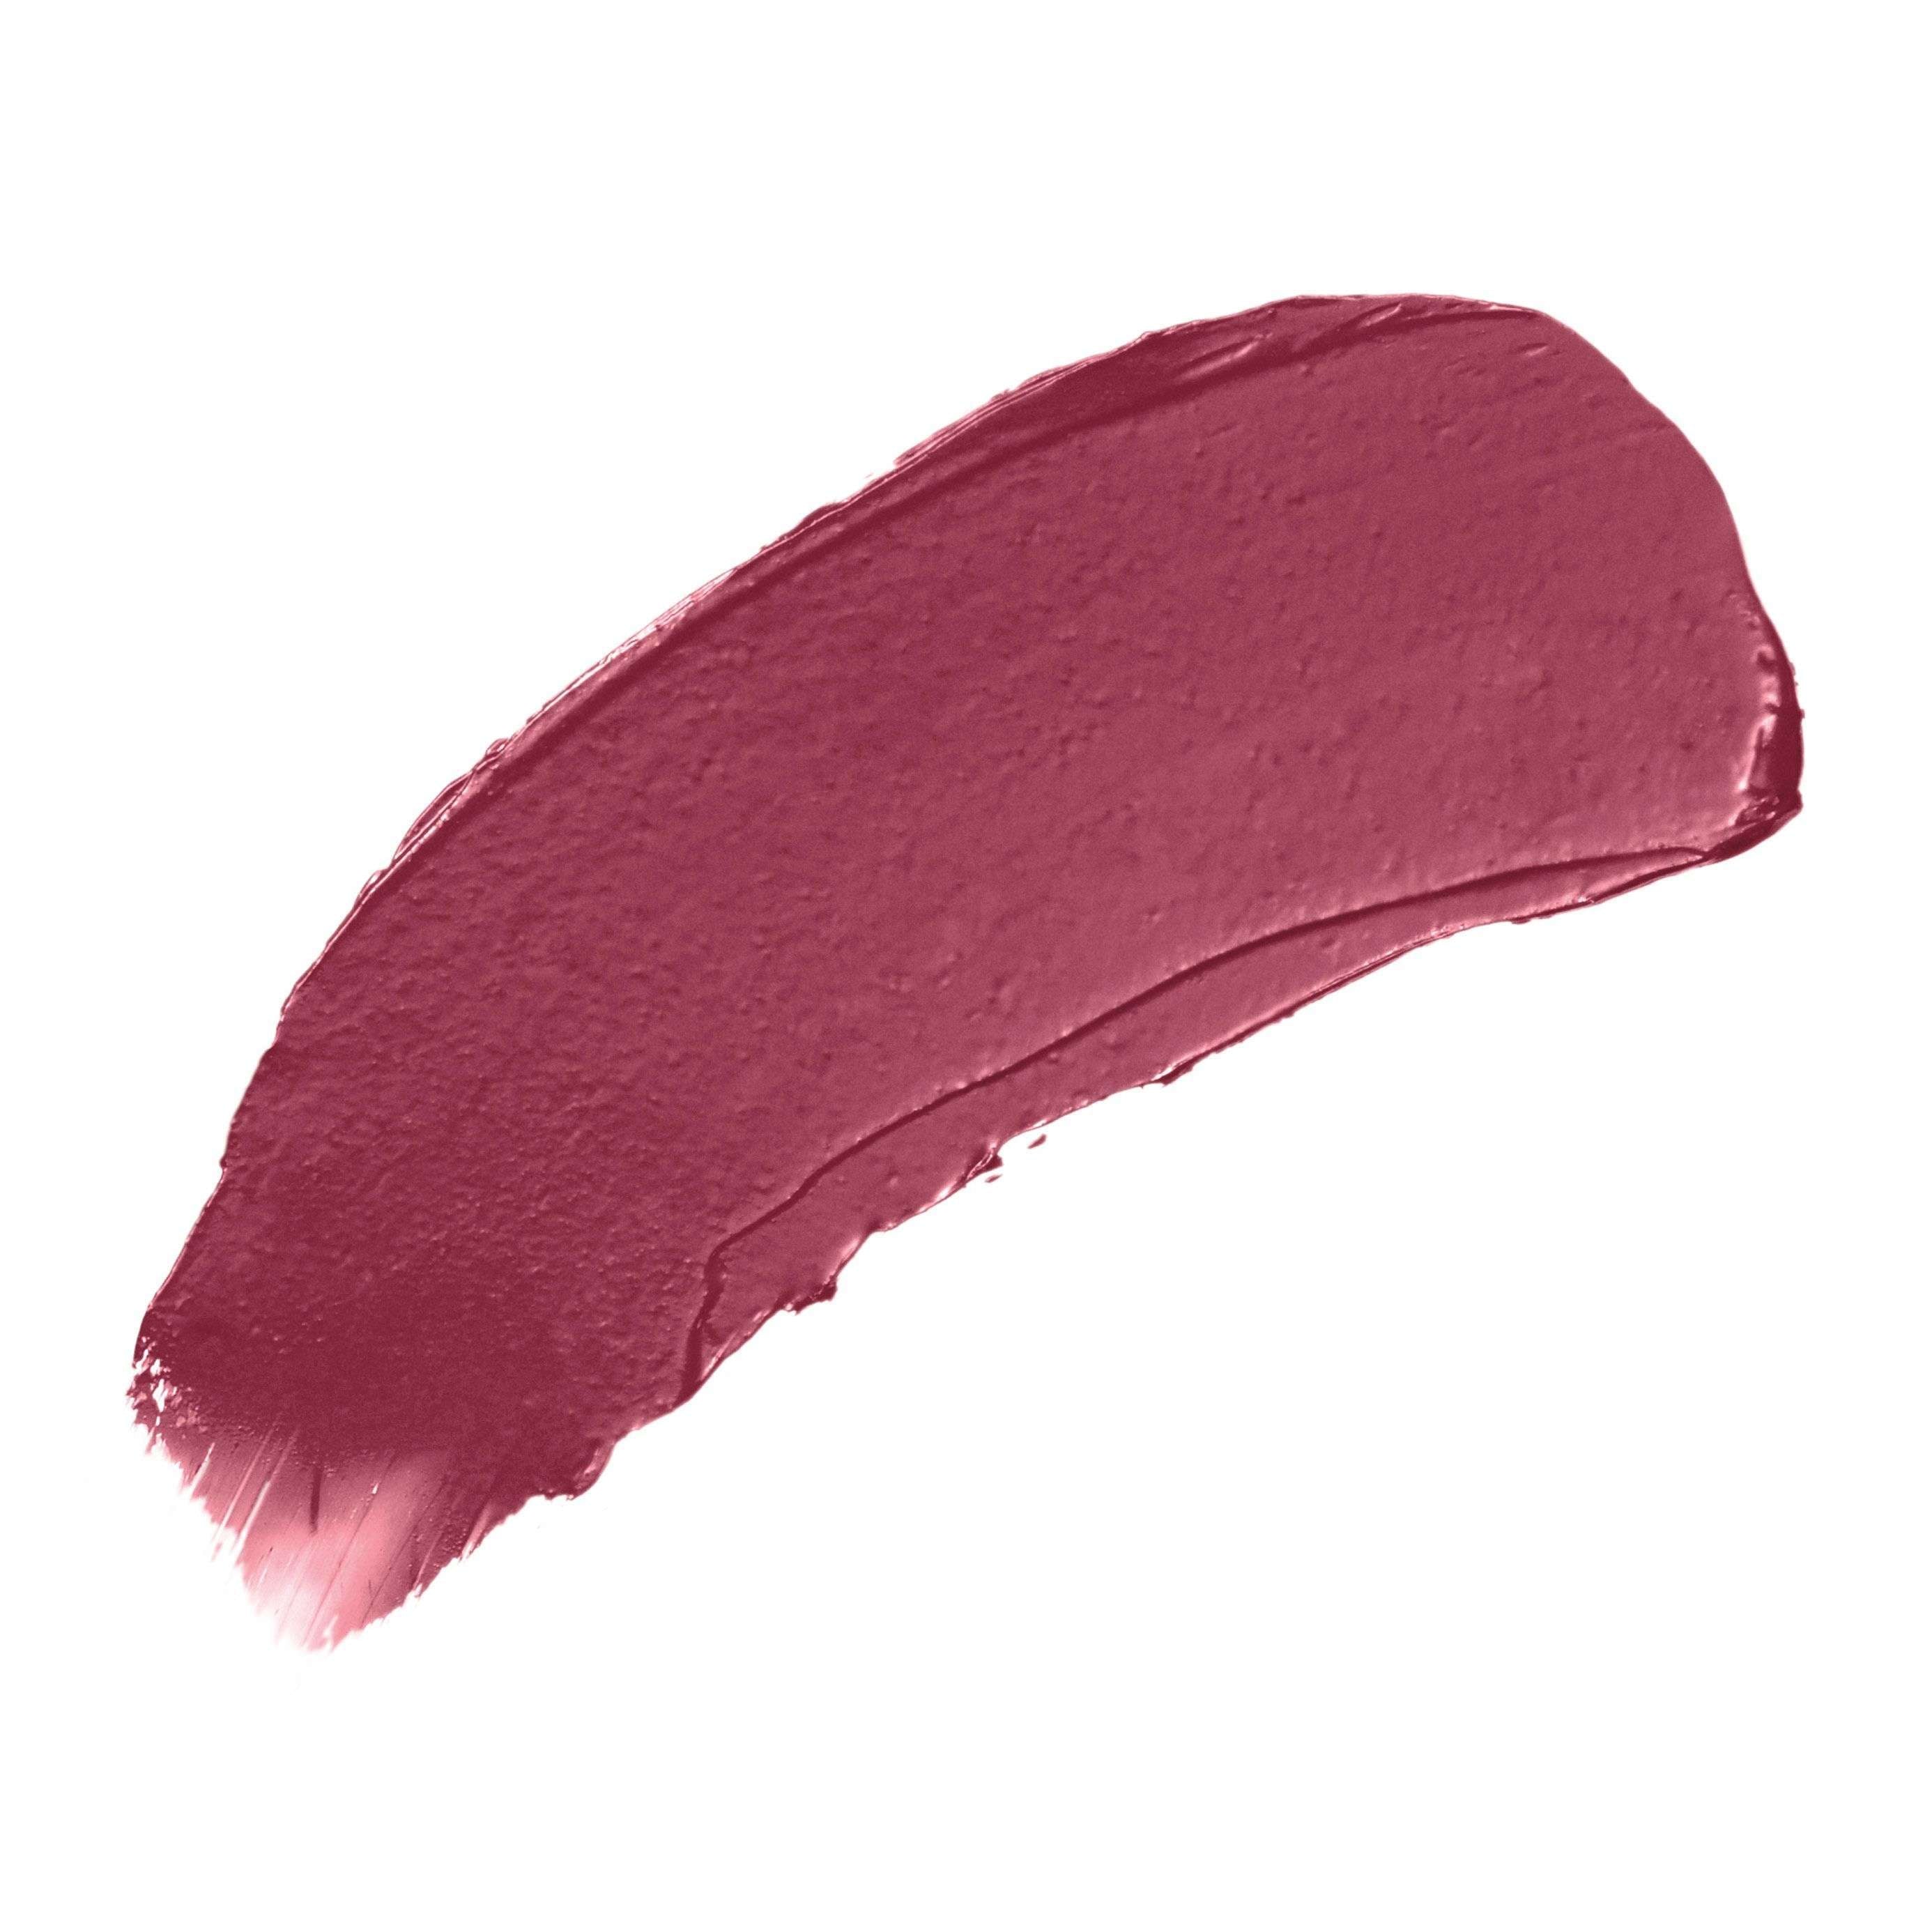 Jane Iredale Triple Luxe Long Lasting Naturally Moist Lipstick™, Rose Triple Luxe Lipstick